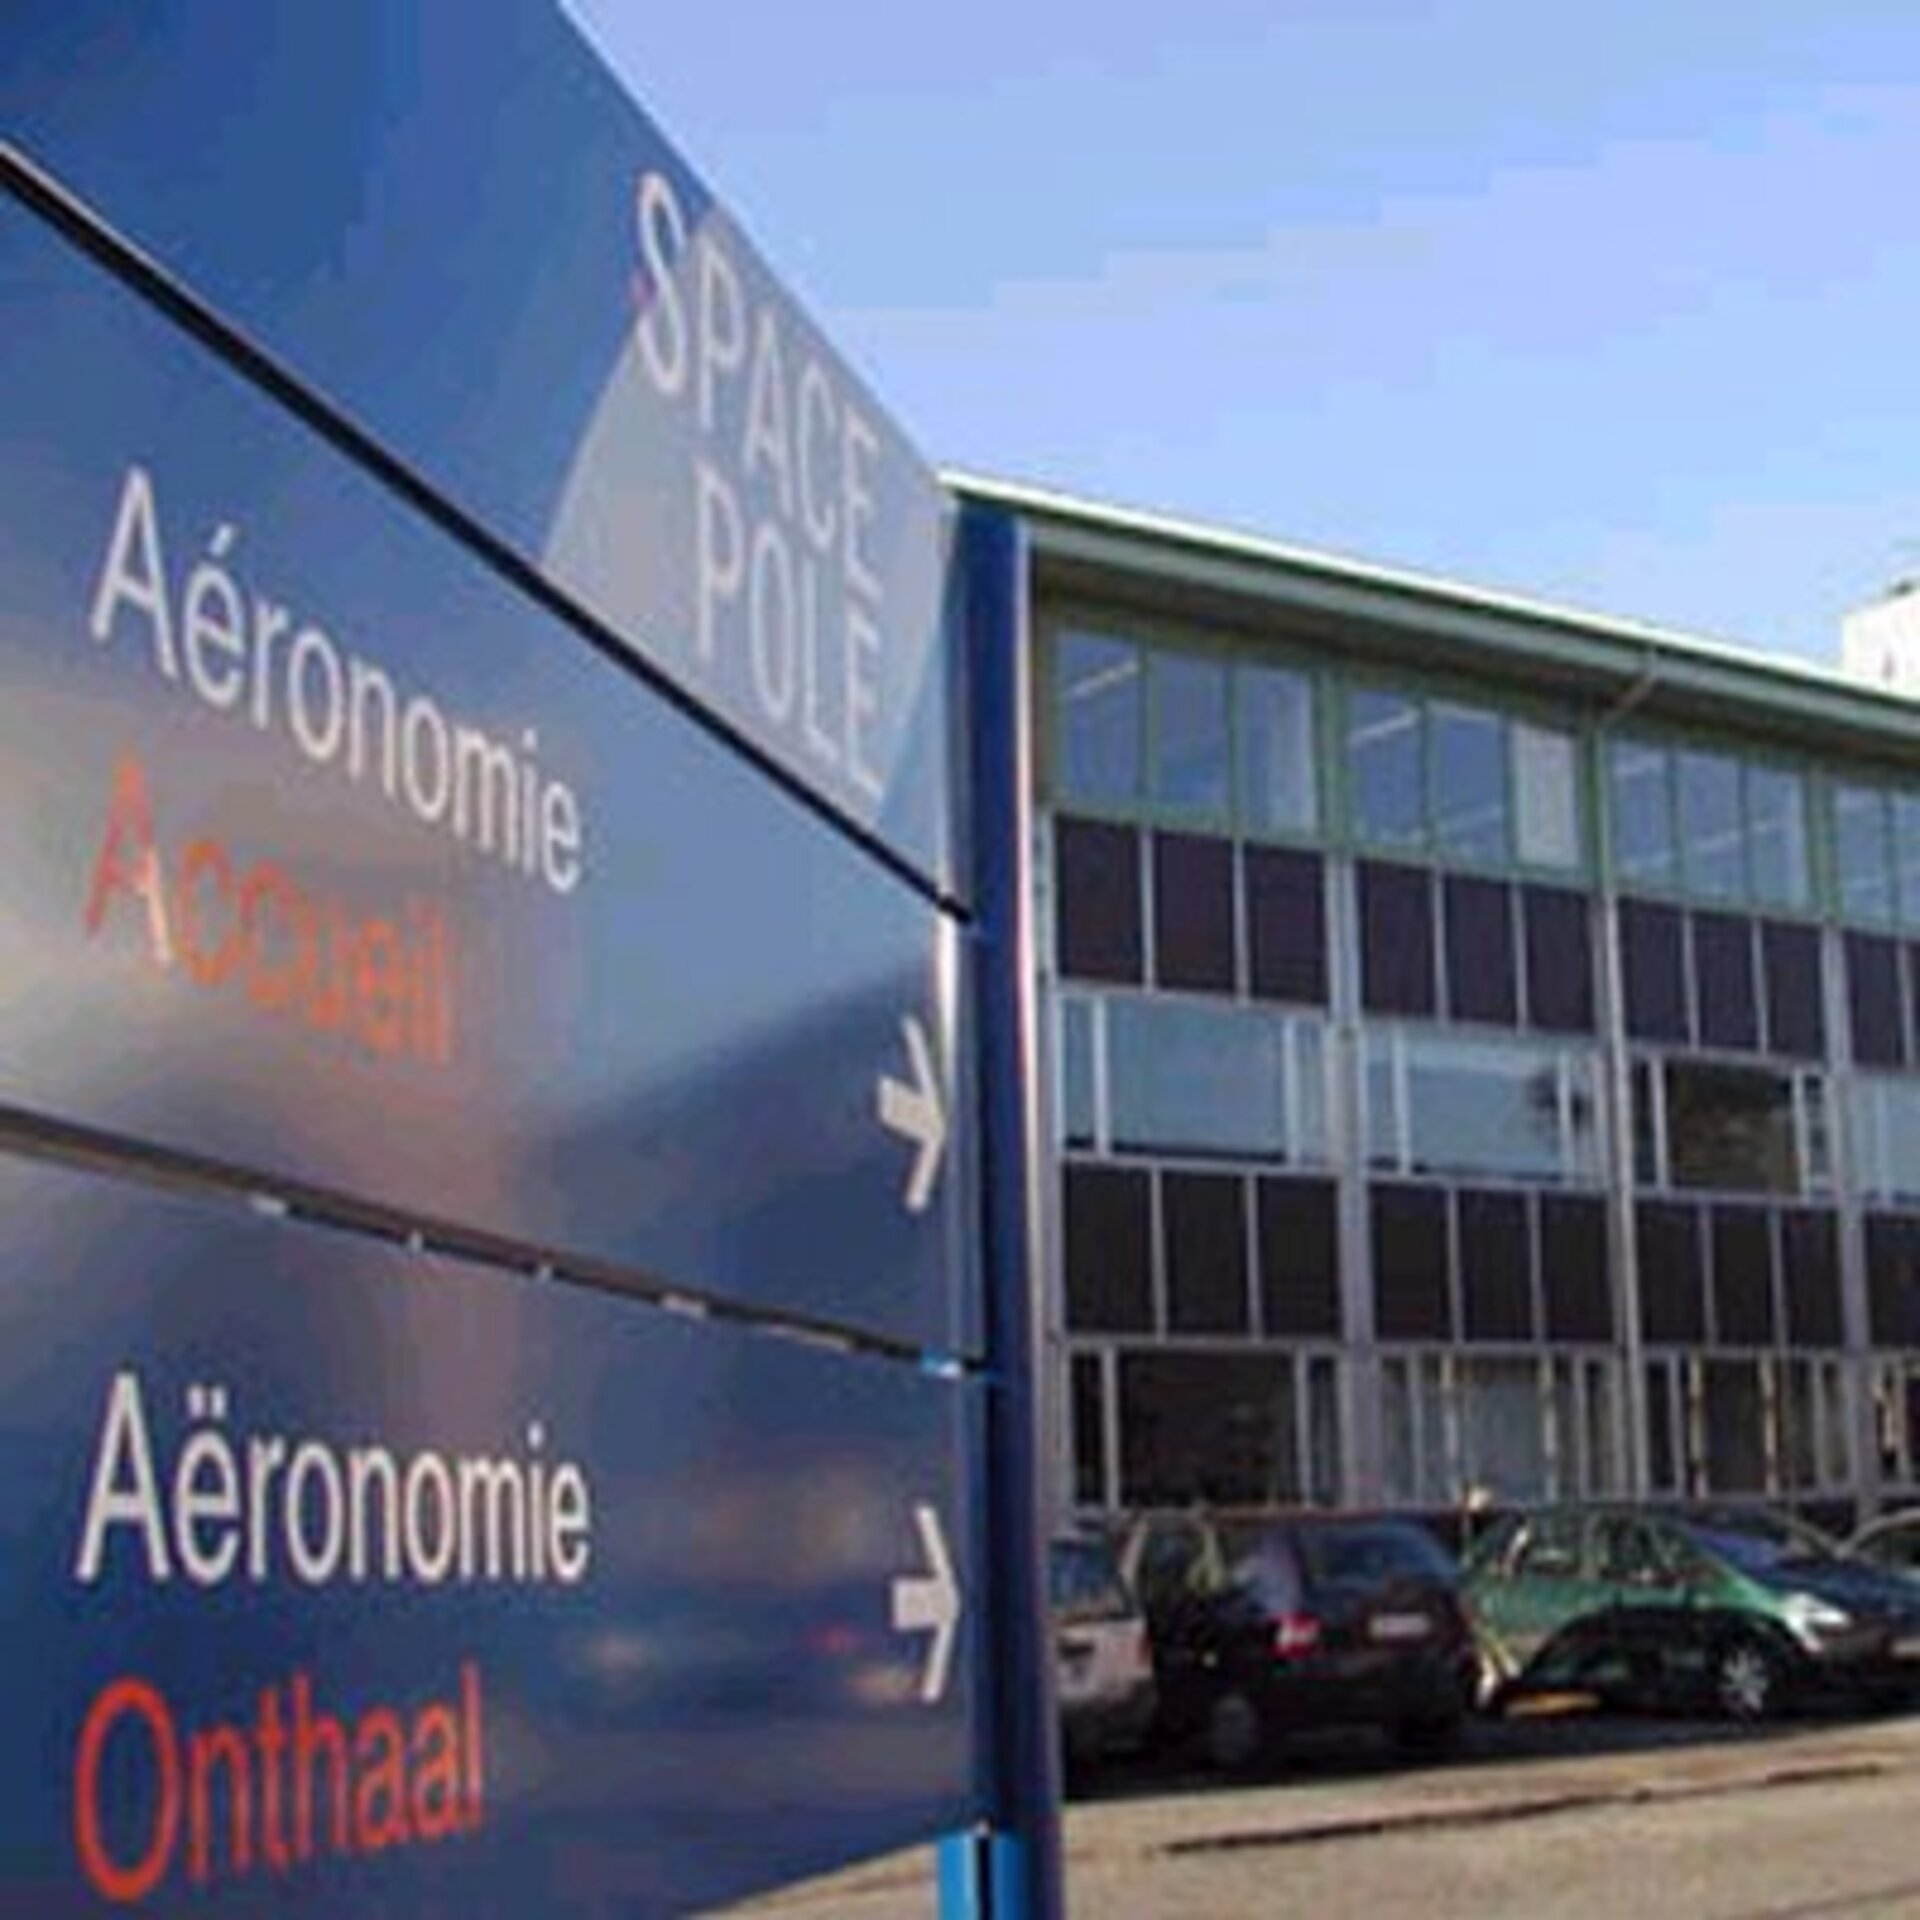 The Belgian Institute for Space Aeronomy